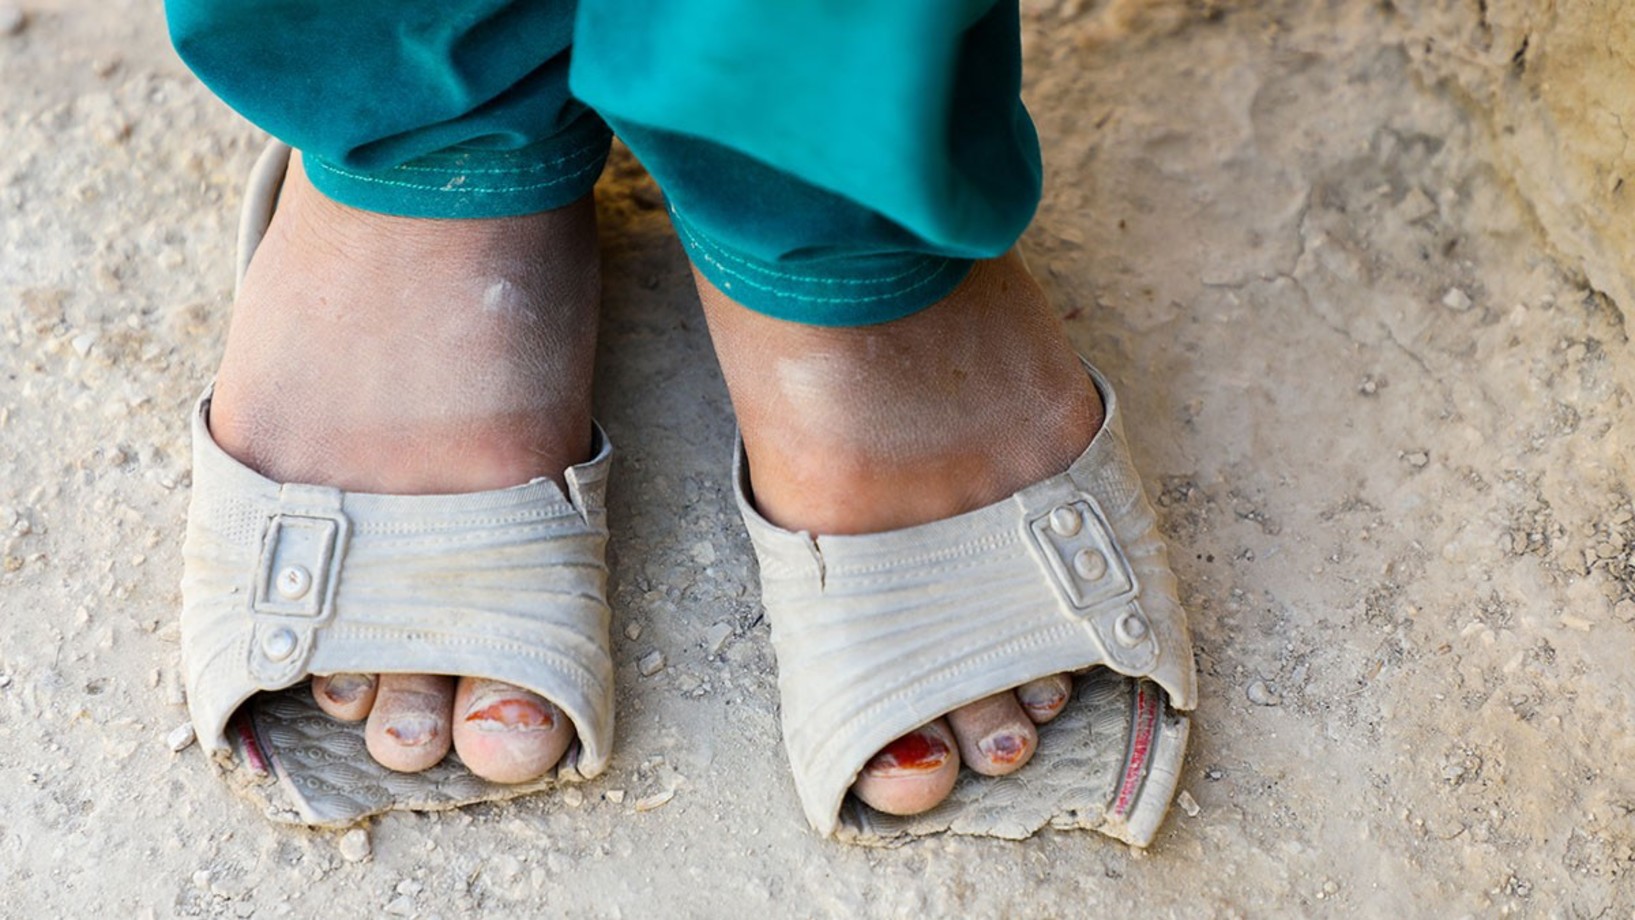 Kaputte Schuhe, Afghanistan 2020